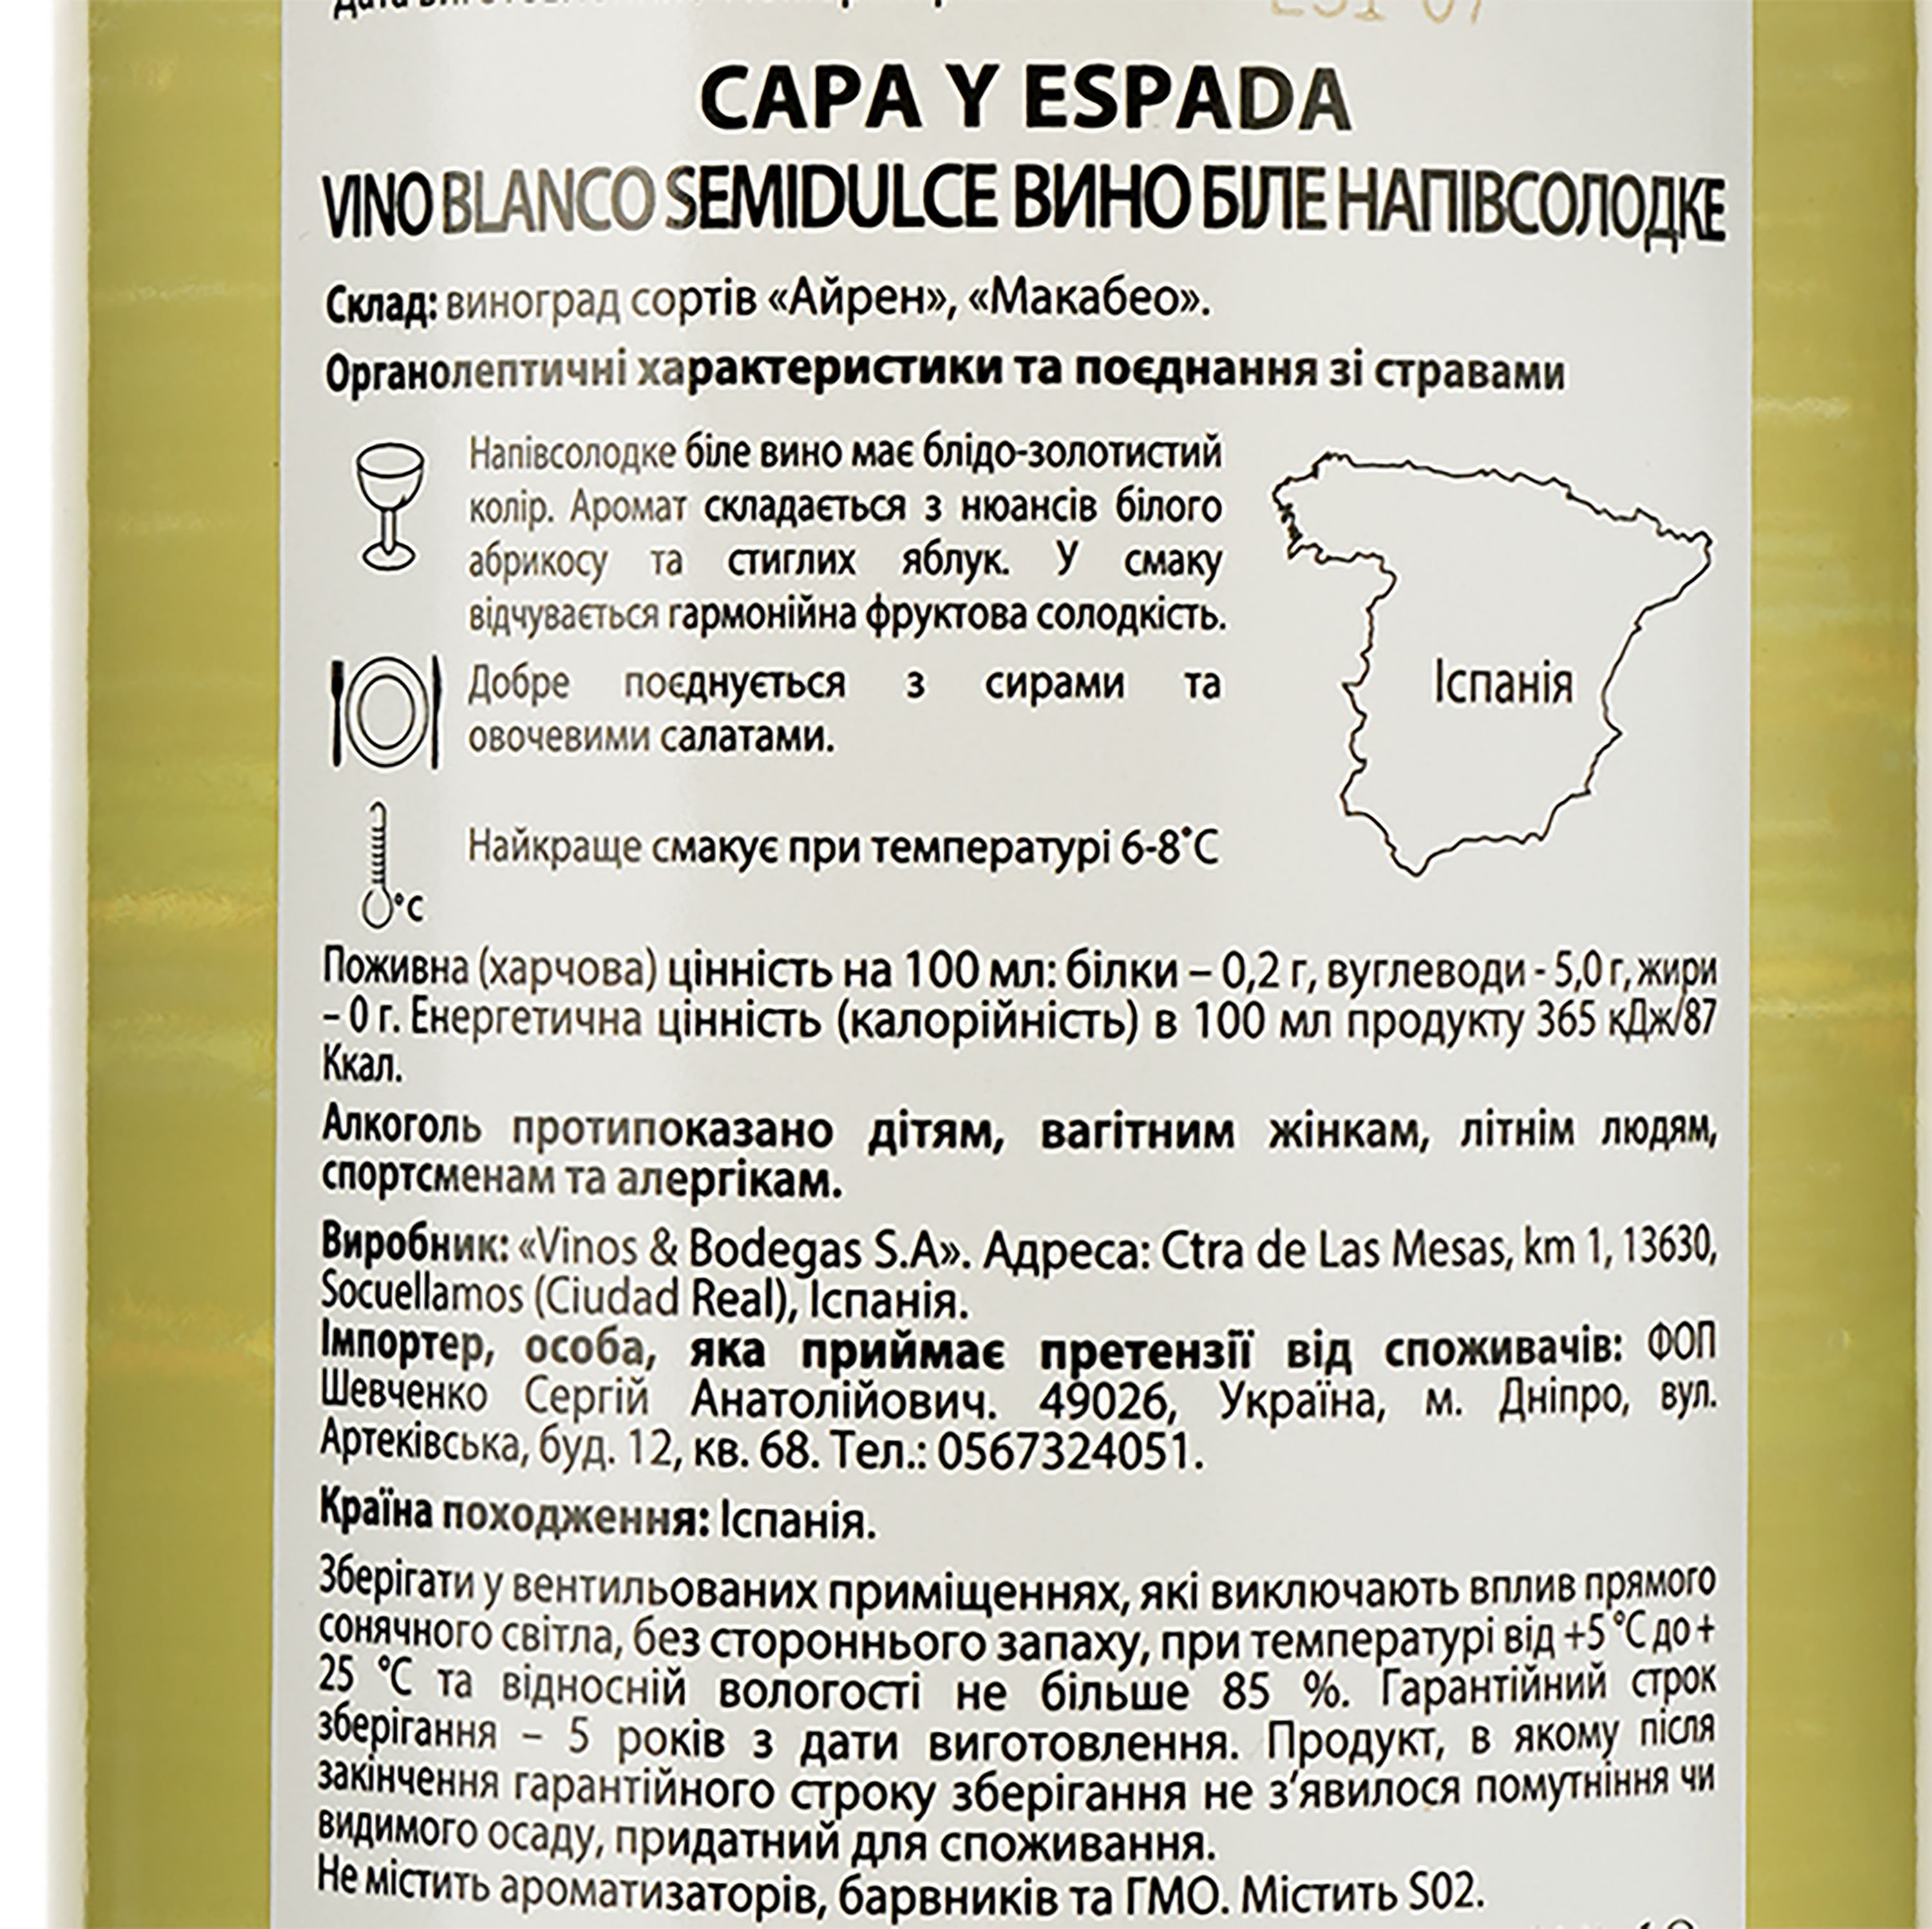 Вино Capa y Espada Vino Blanco Semidulce, біле, напівсолодке, 0,75 л - фото 3